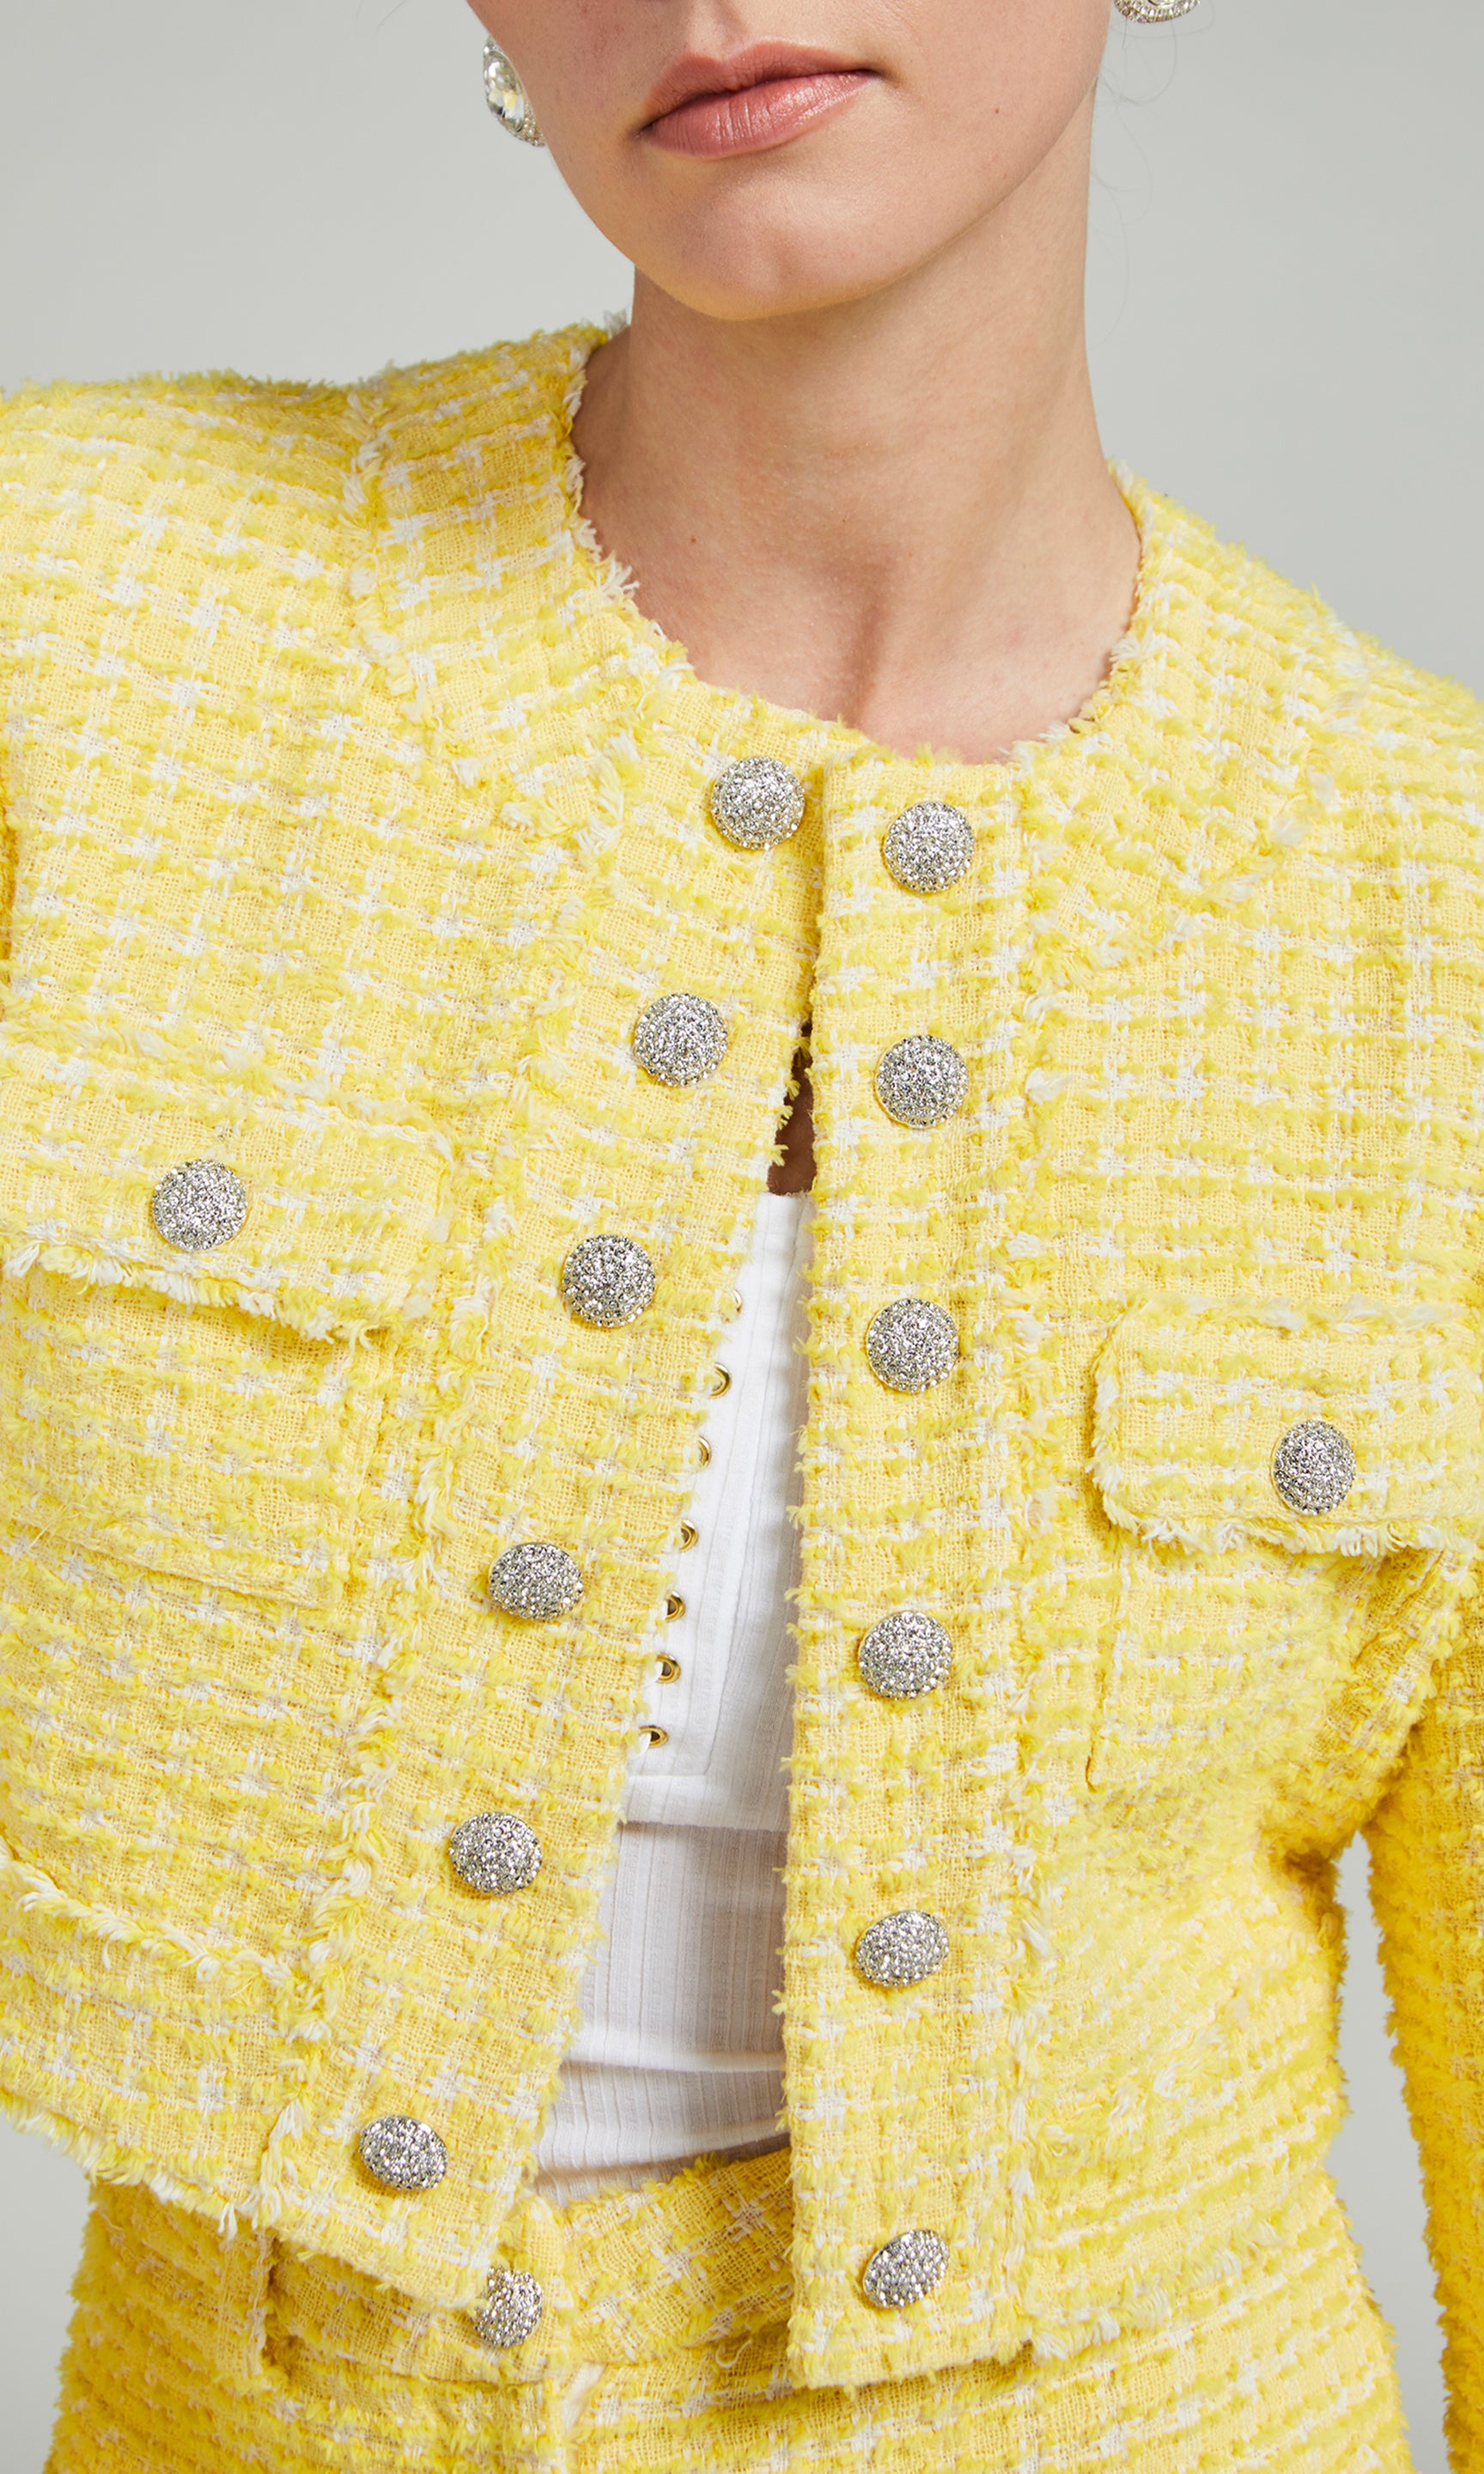 Generation Love Valentina Cropped Tweed Jacket Xs / Yellow/White